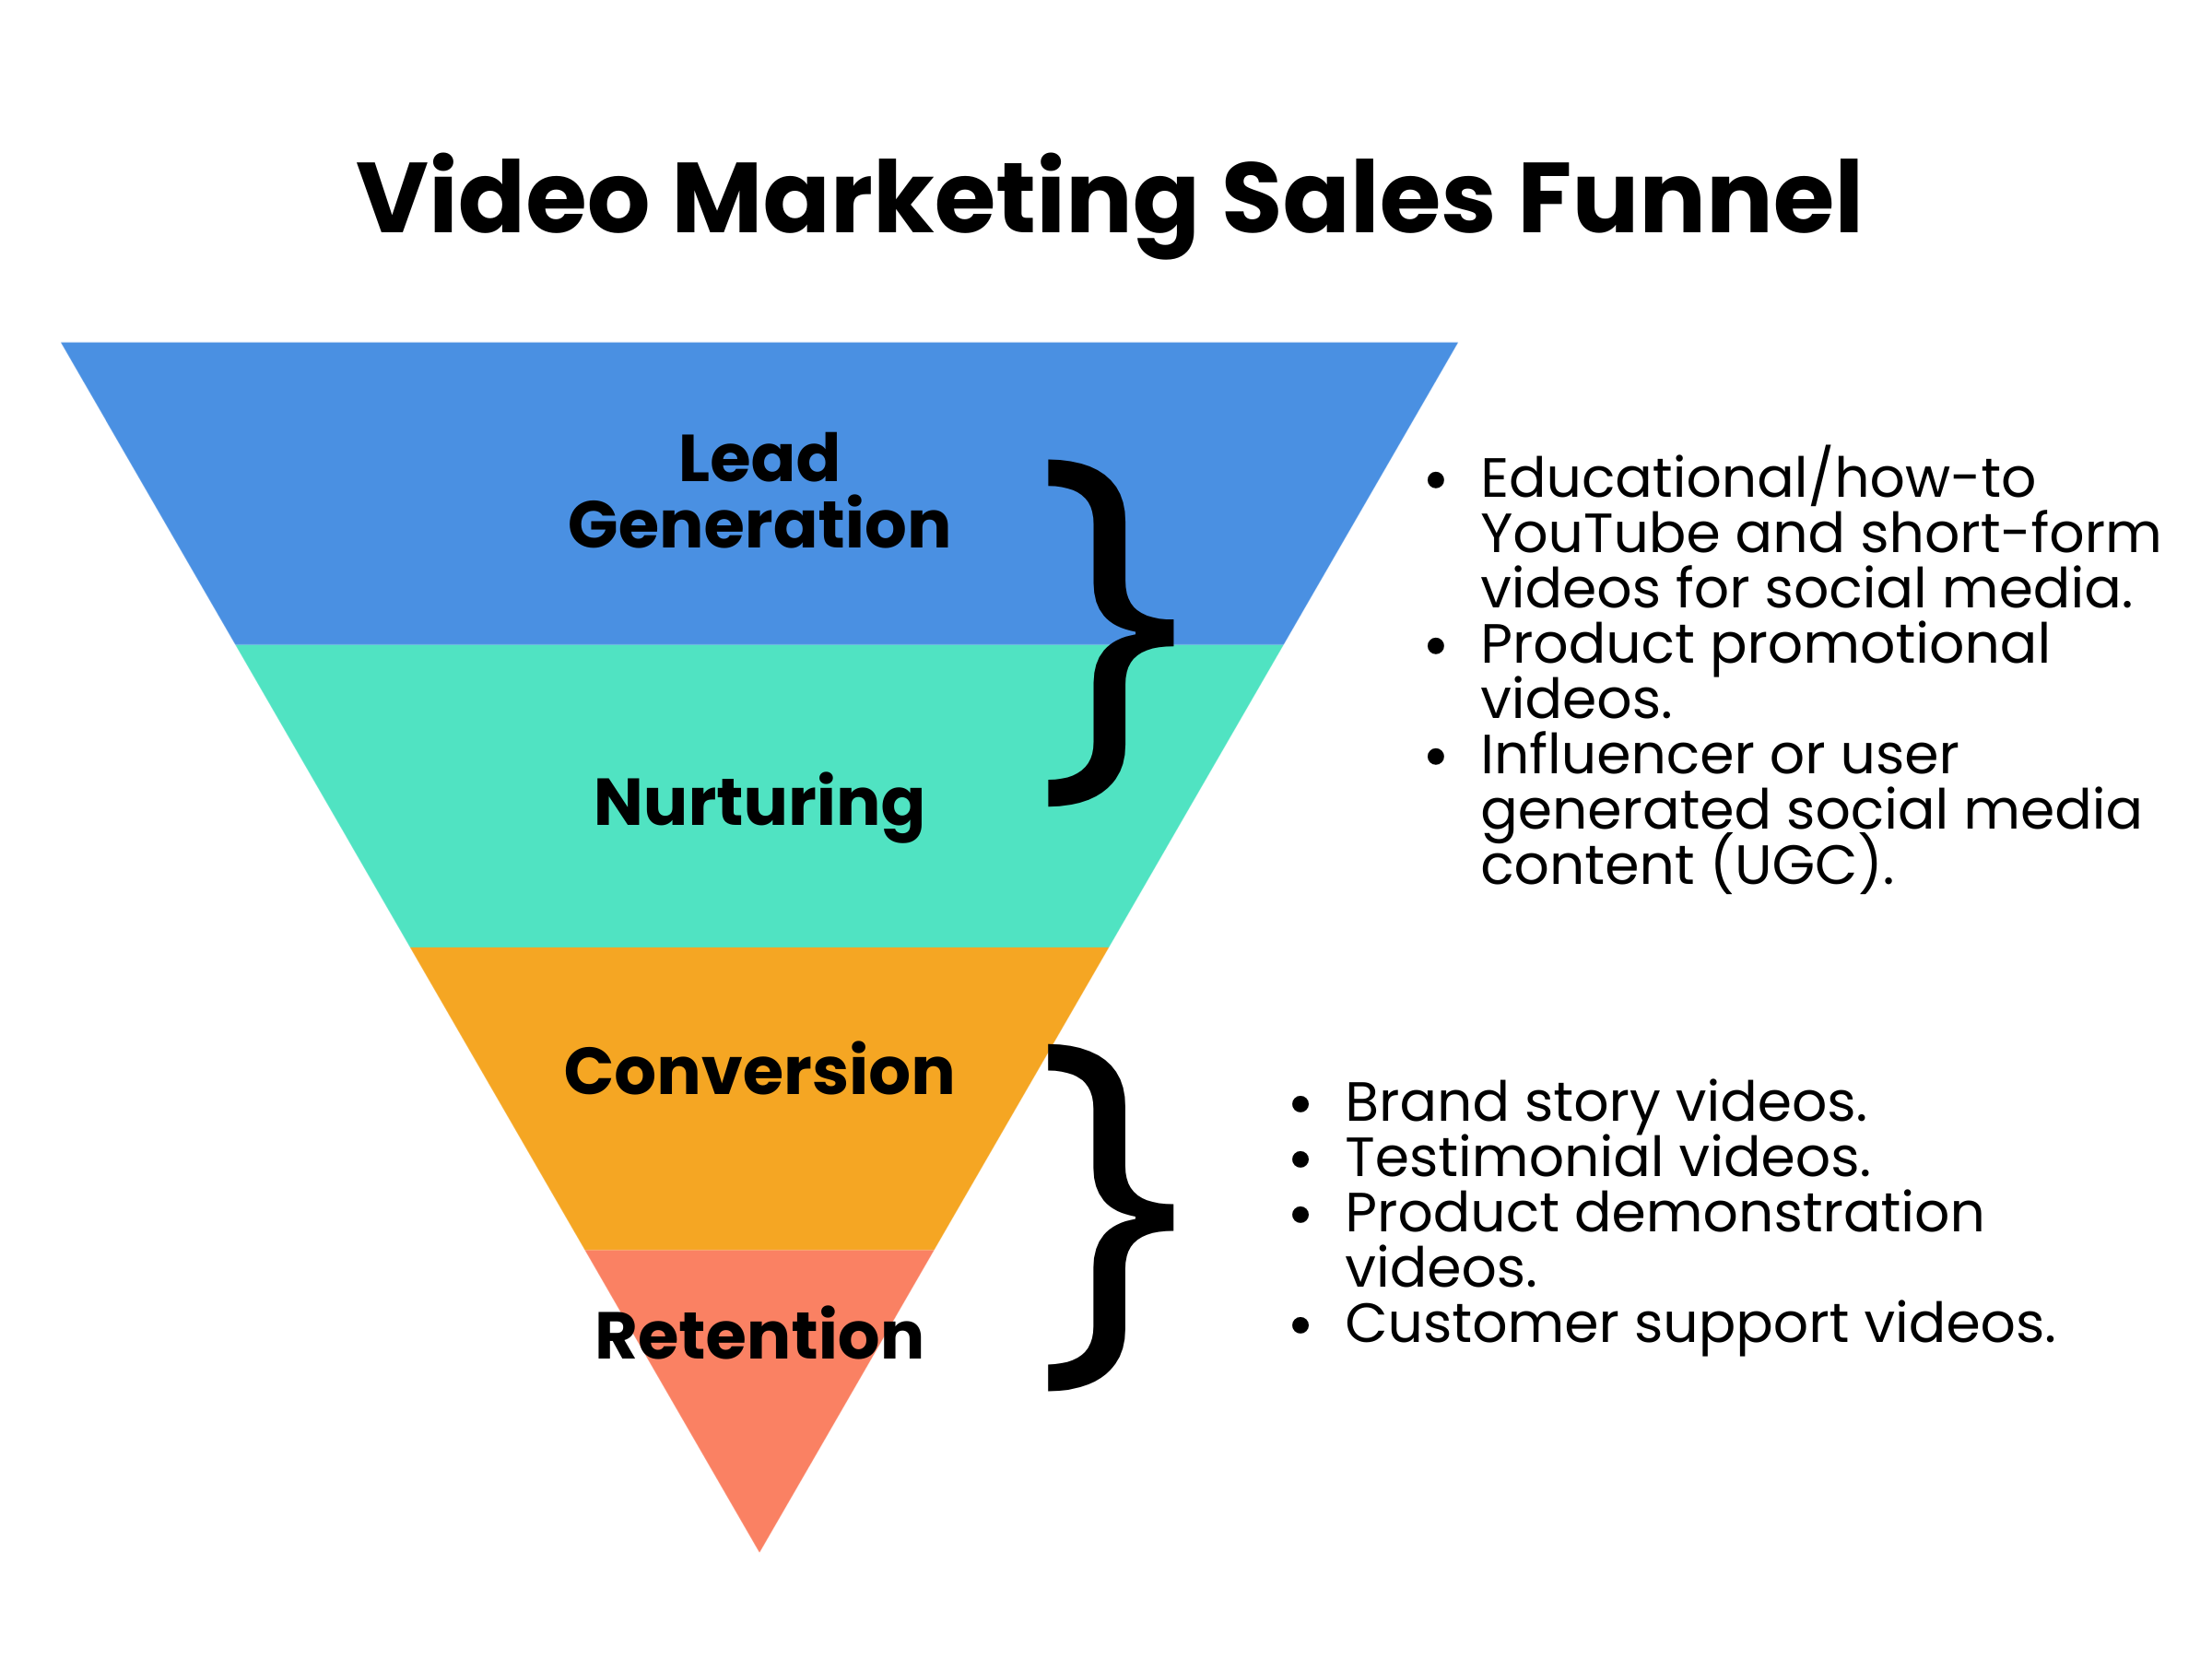 Video Marketing Sales Funnel - Video Marketing Strategy